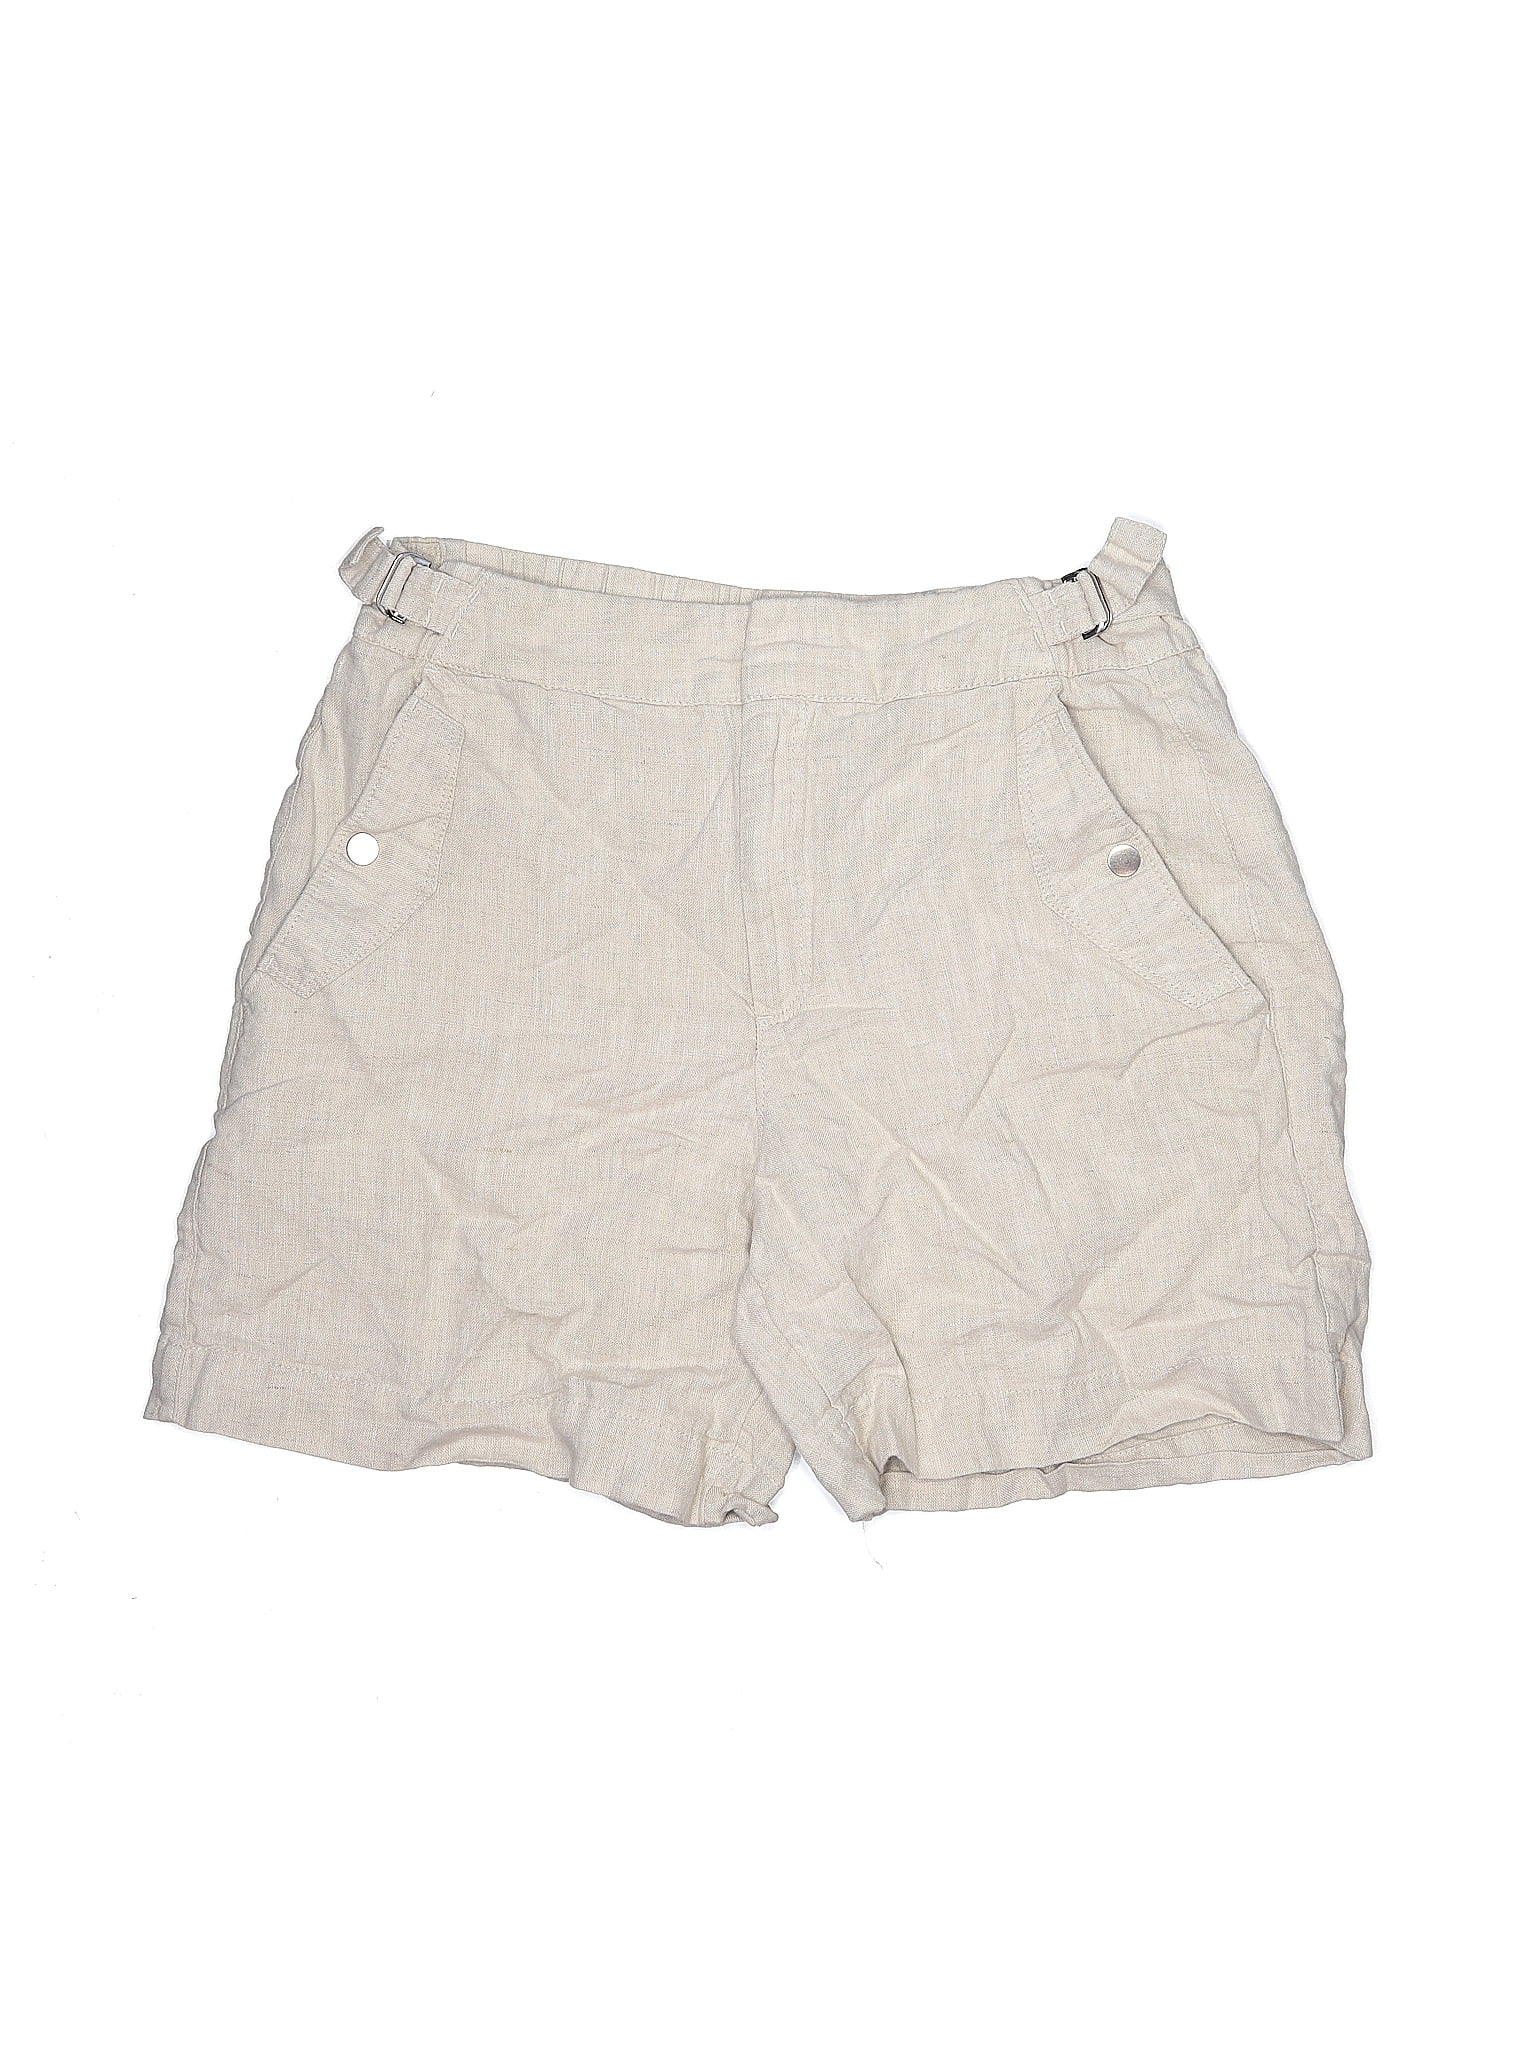 Athleta 100% Linen Solid Tan Ivory Shorts Size 8 - 51% off | thredUP